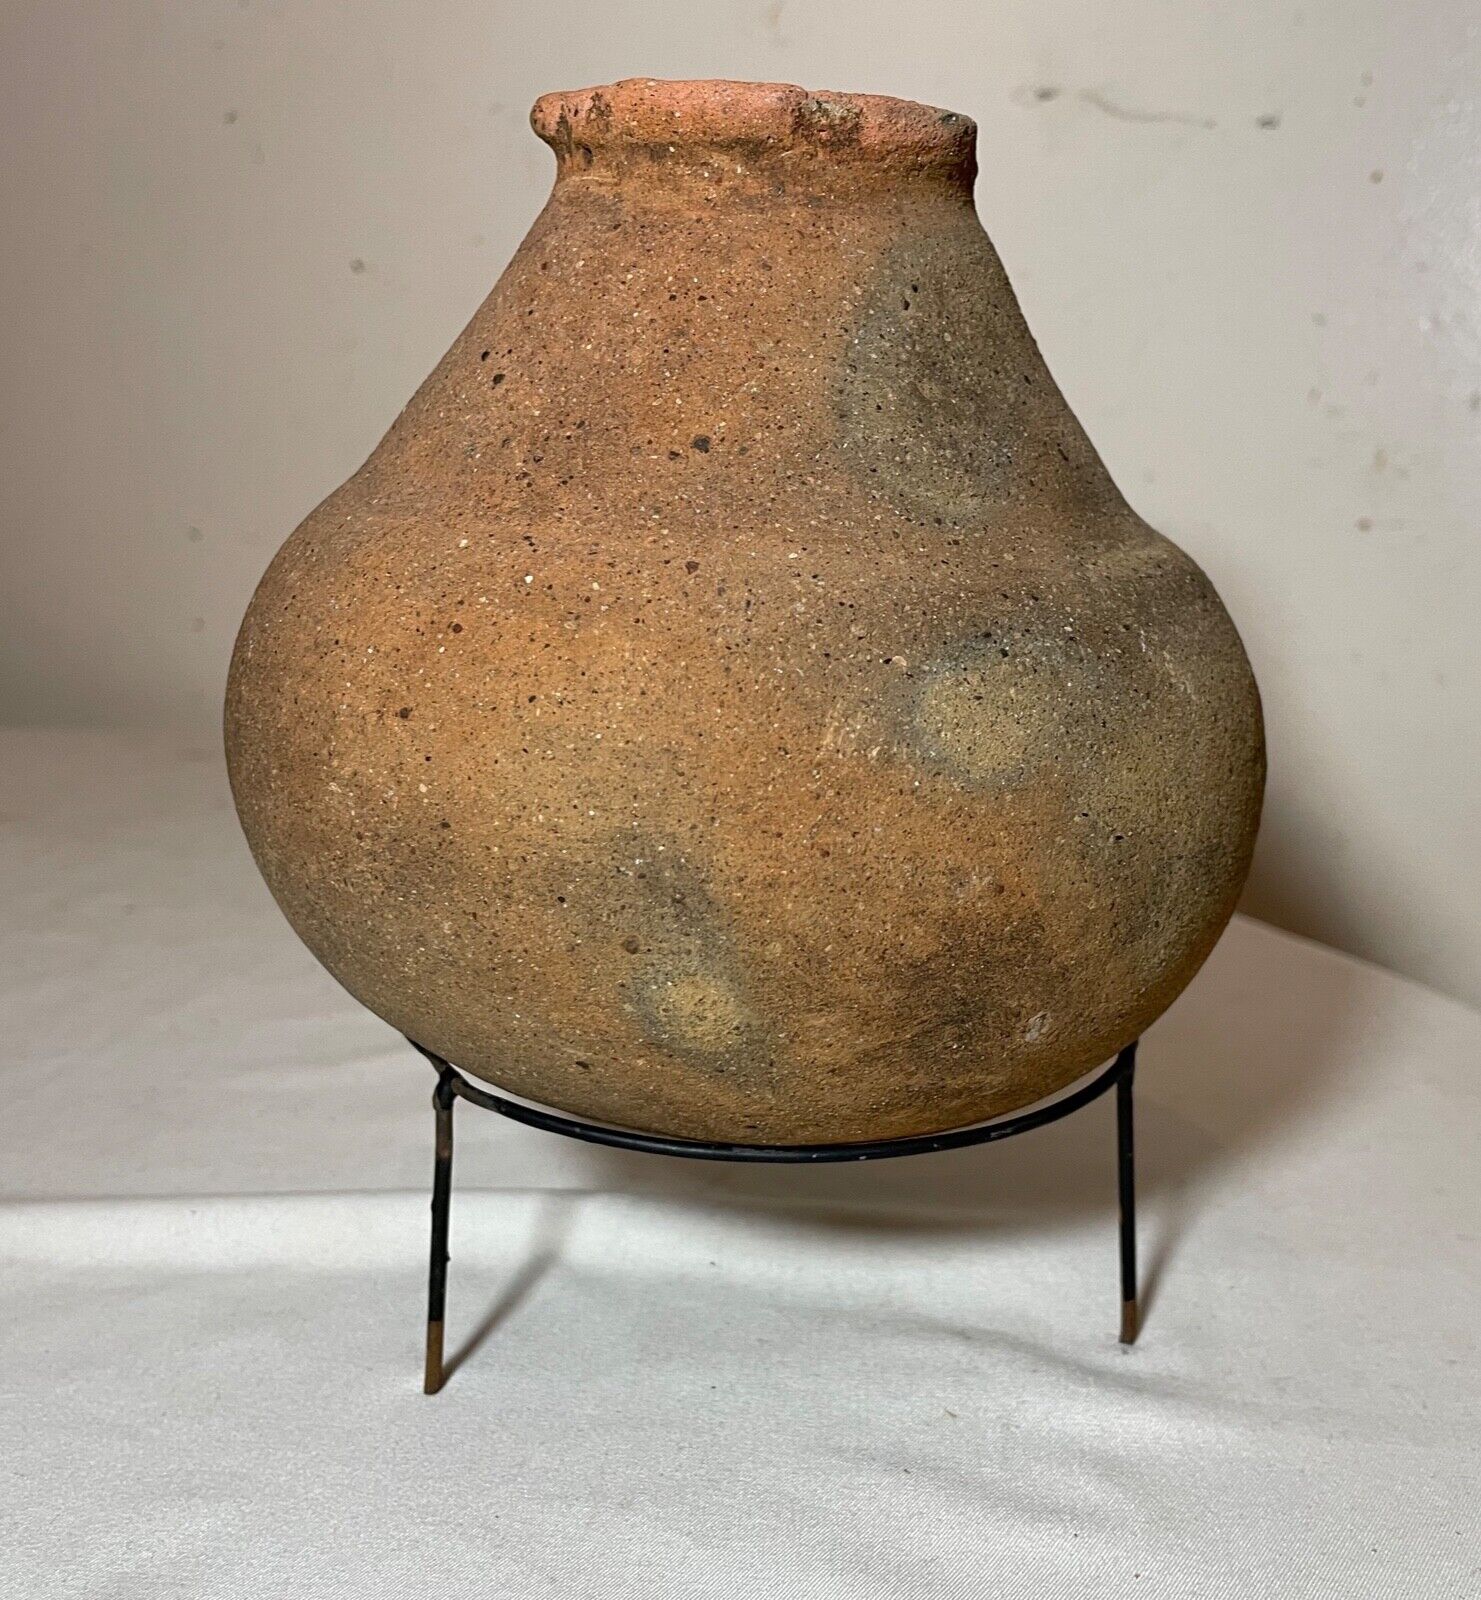 antique Peru pre columbian 30-100 A.D. vessel pottery vase sculpture terracotta.